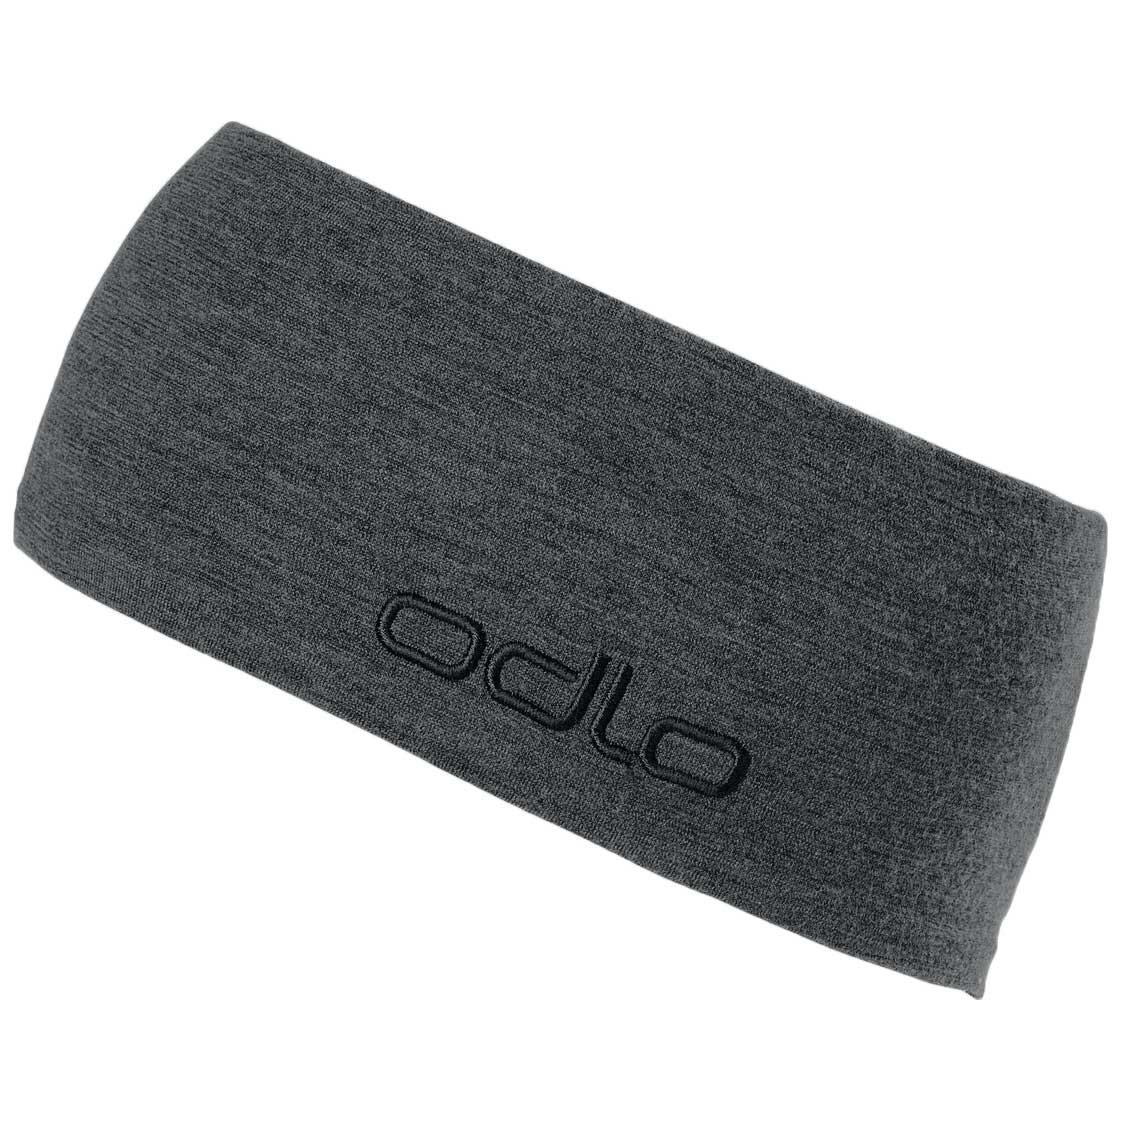 Produktbild von Odlo Revelstoke Performance Wool Stirnband - odlo graphite grey melange